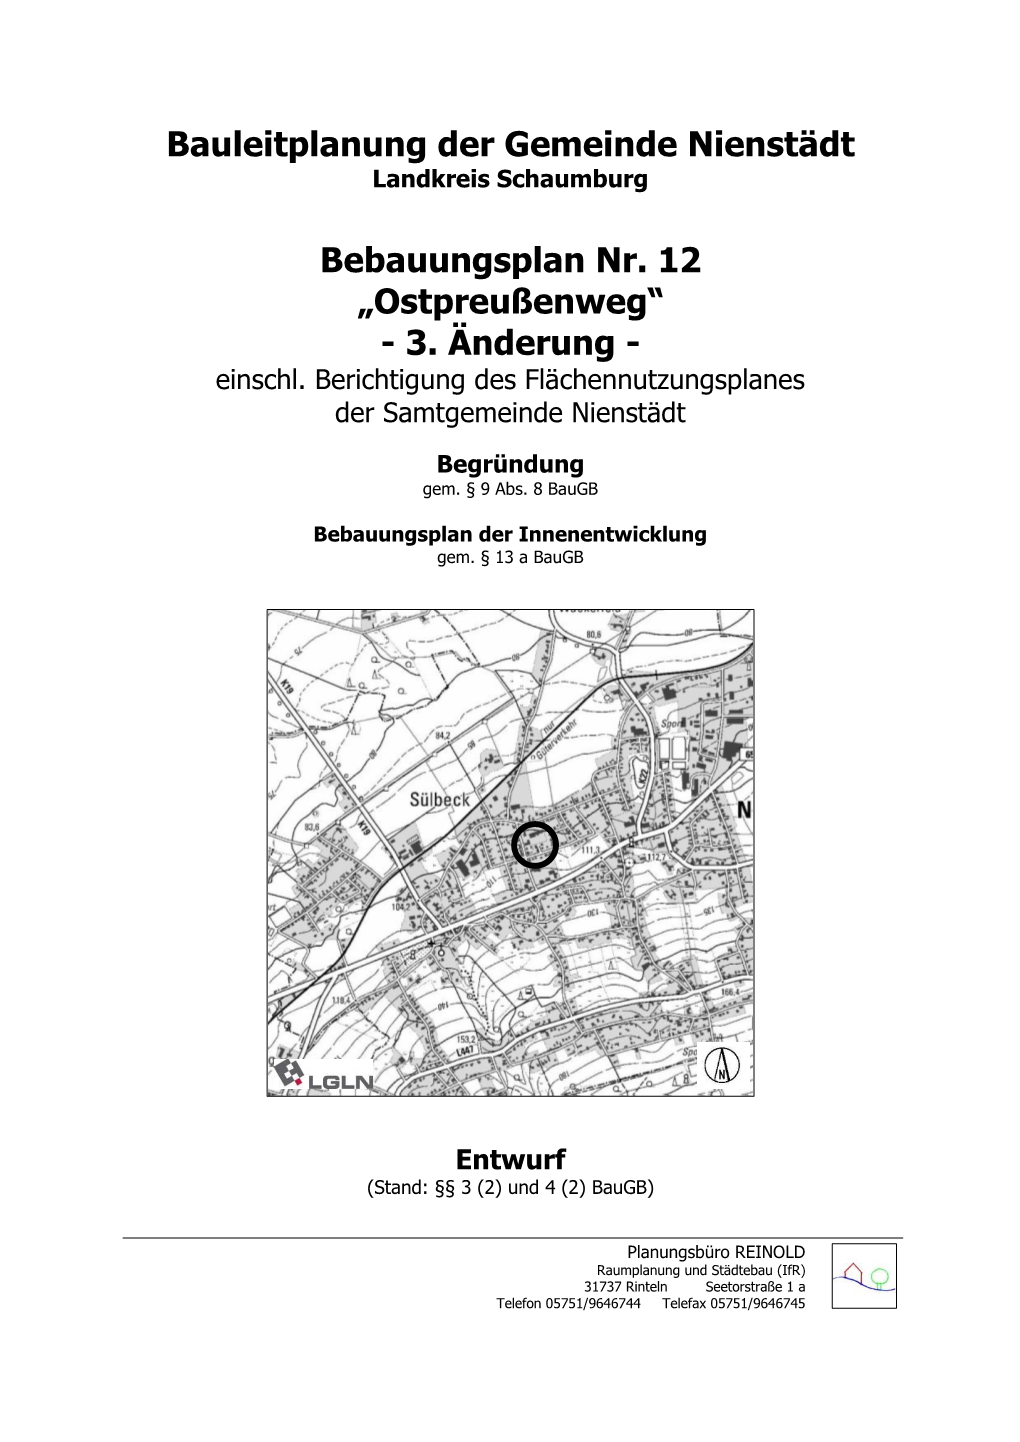 Bebauungsplan Nr. 12 „Ostpreußenweg“ - 3